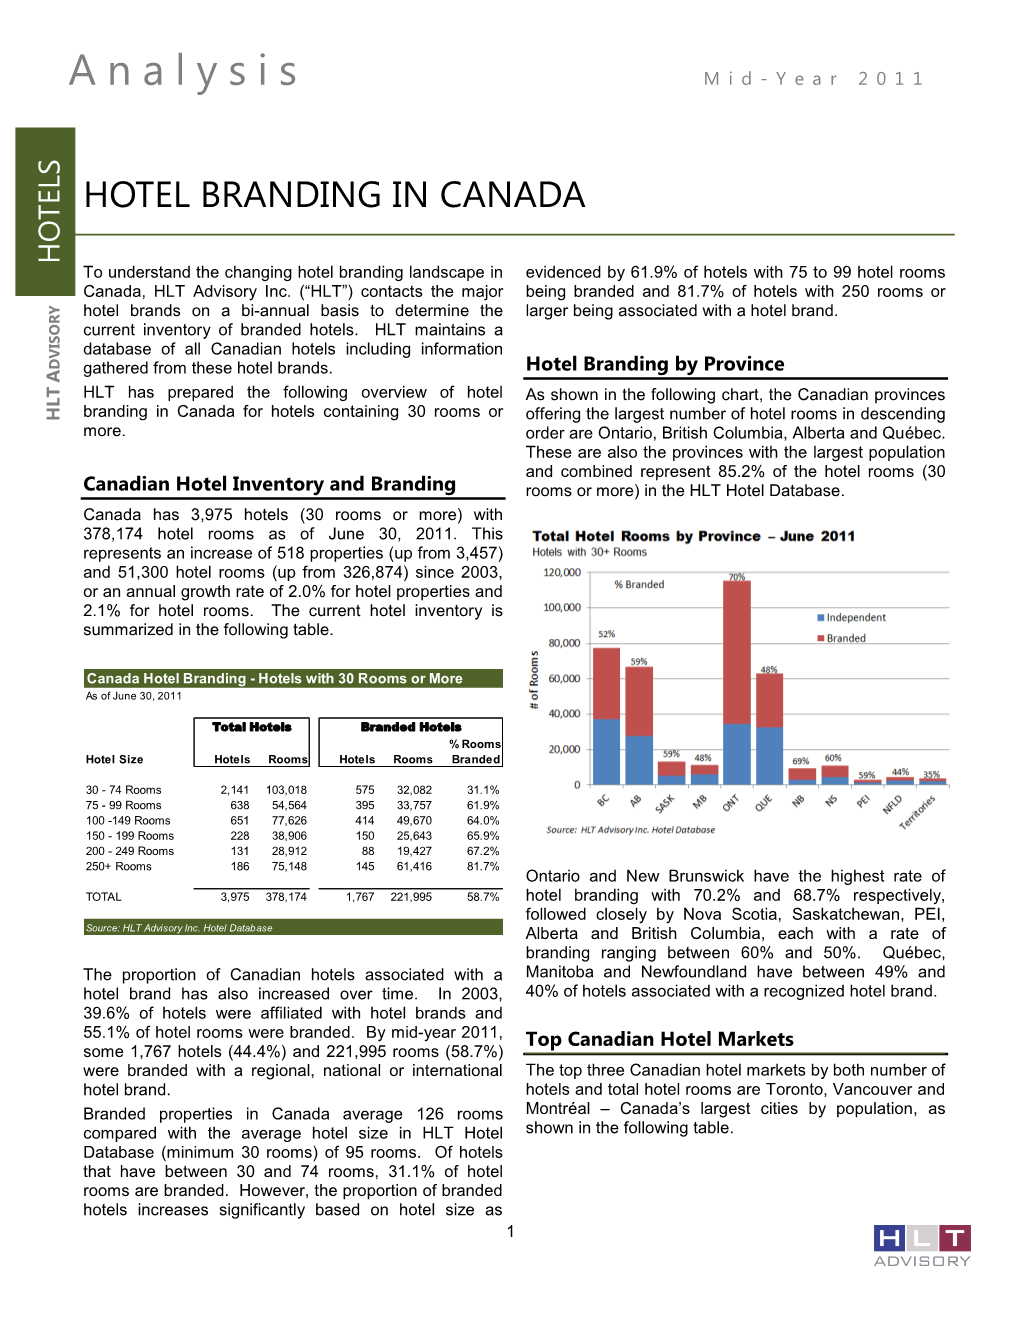 Hotel Branding in Canada